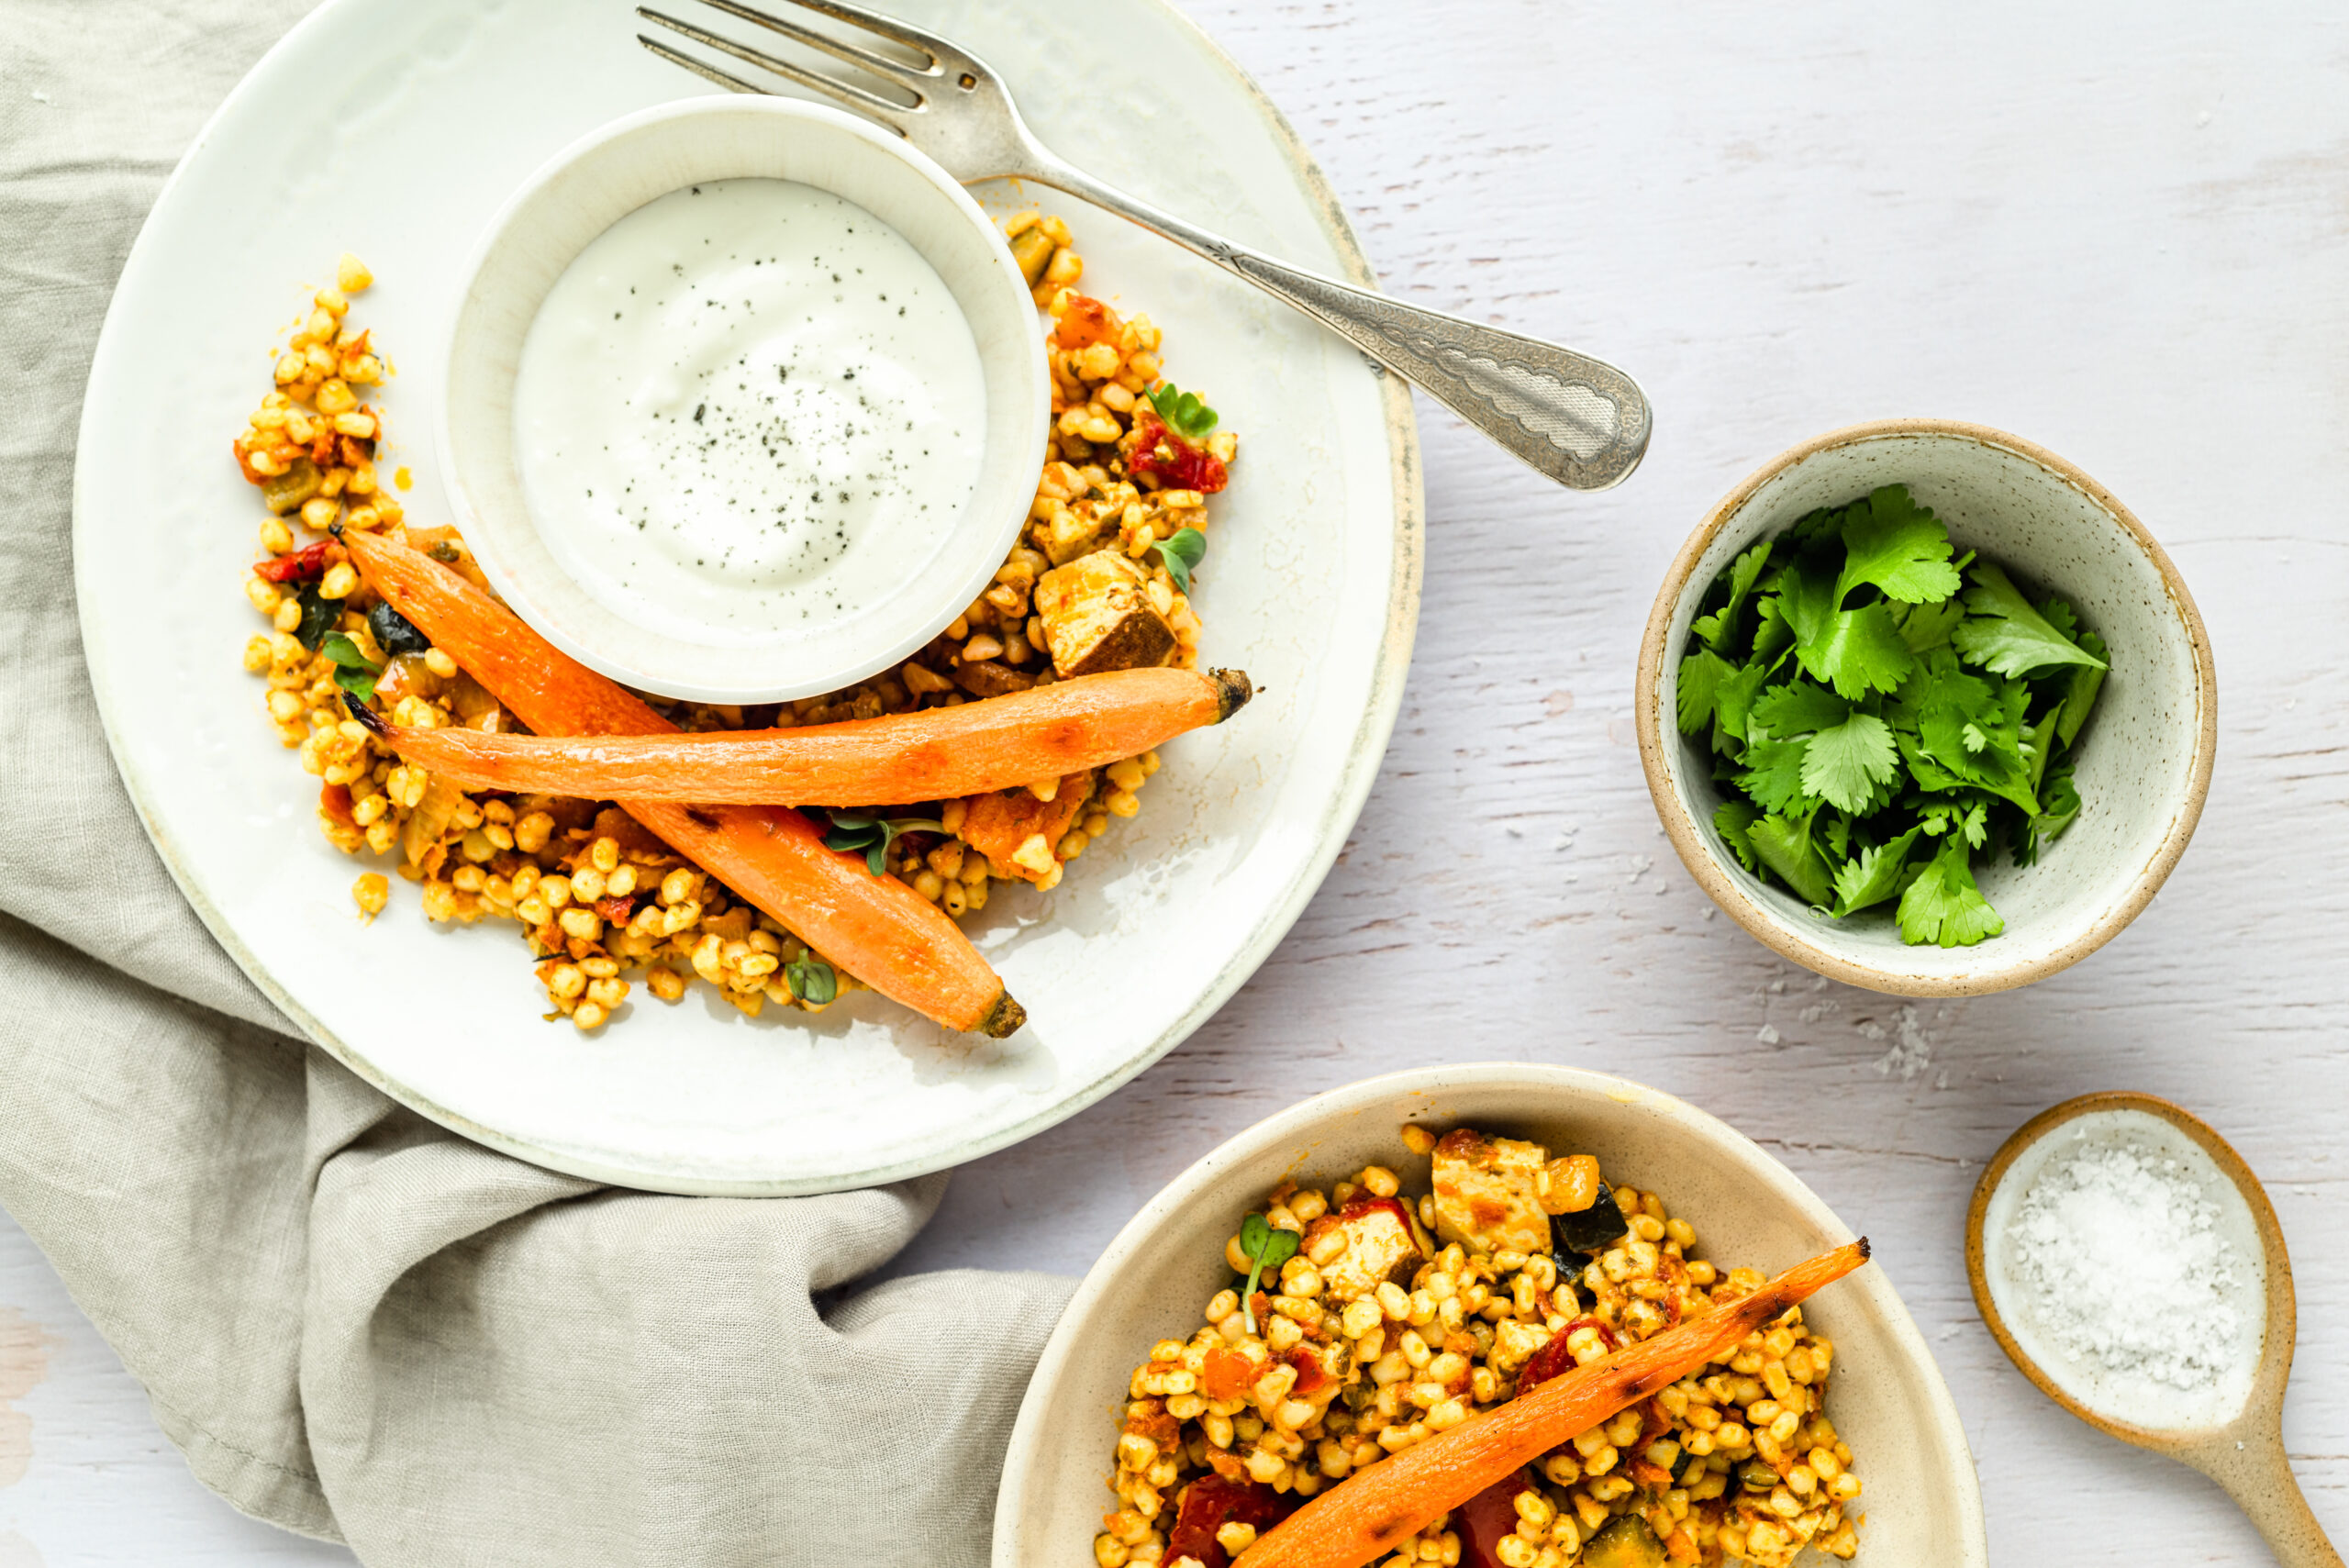 Mediterraner Salat mit geröteten Möhren - Light & Bright Foto - helle Food Fotografie